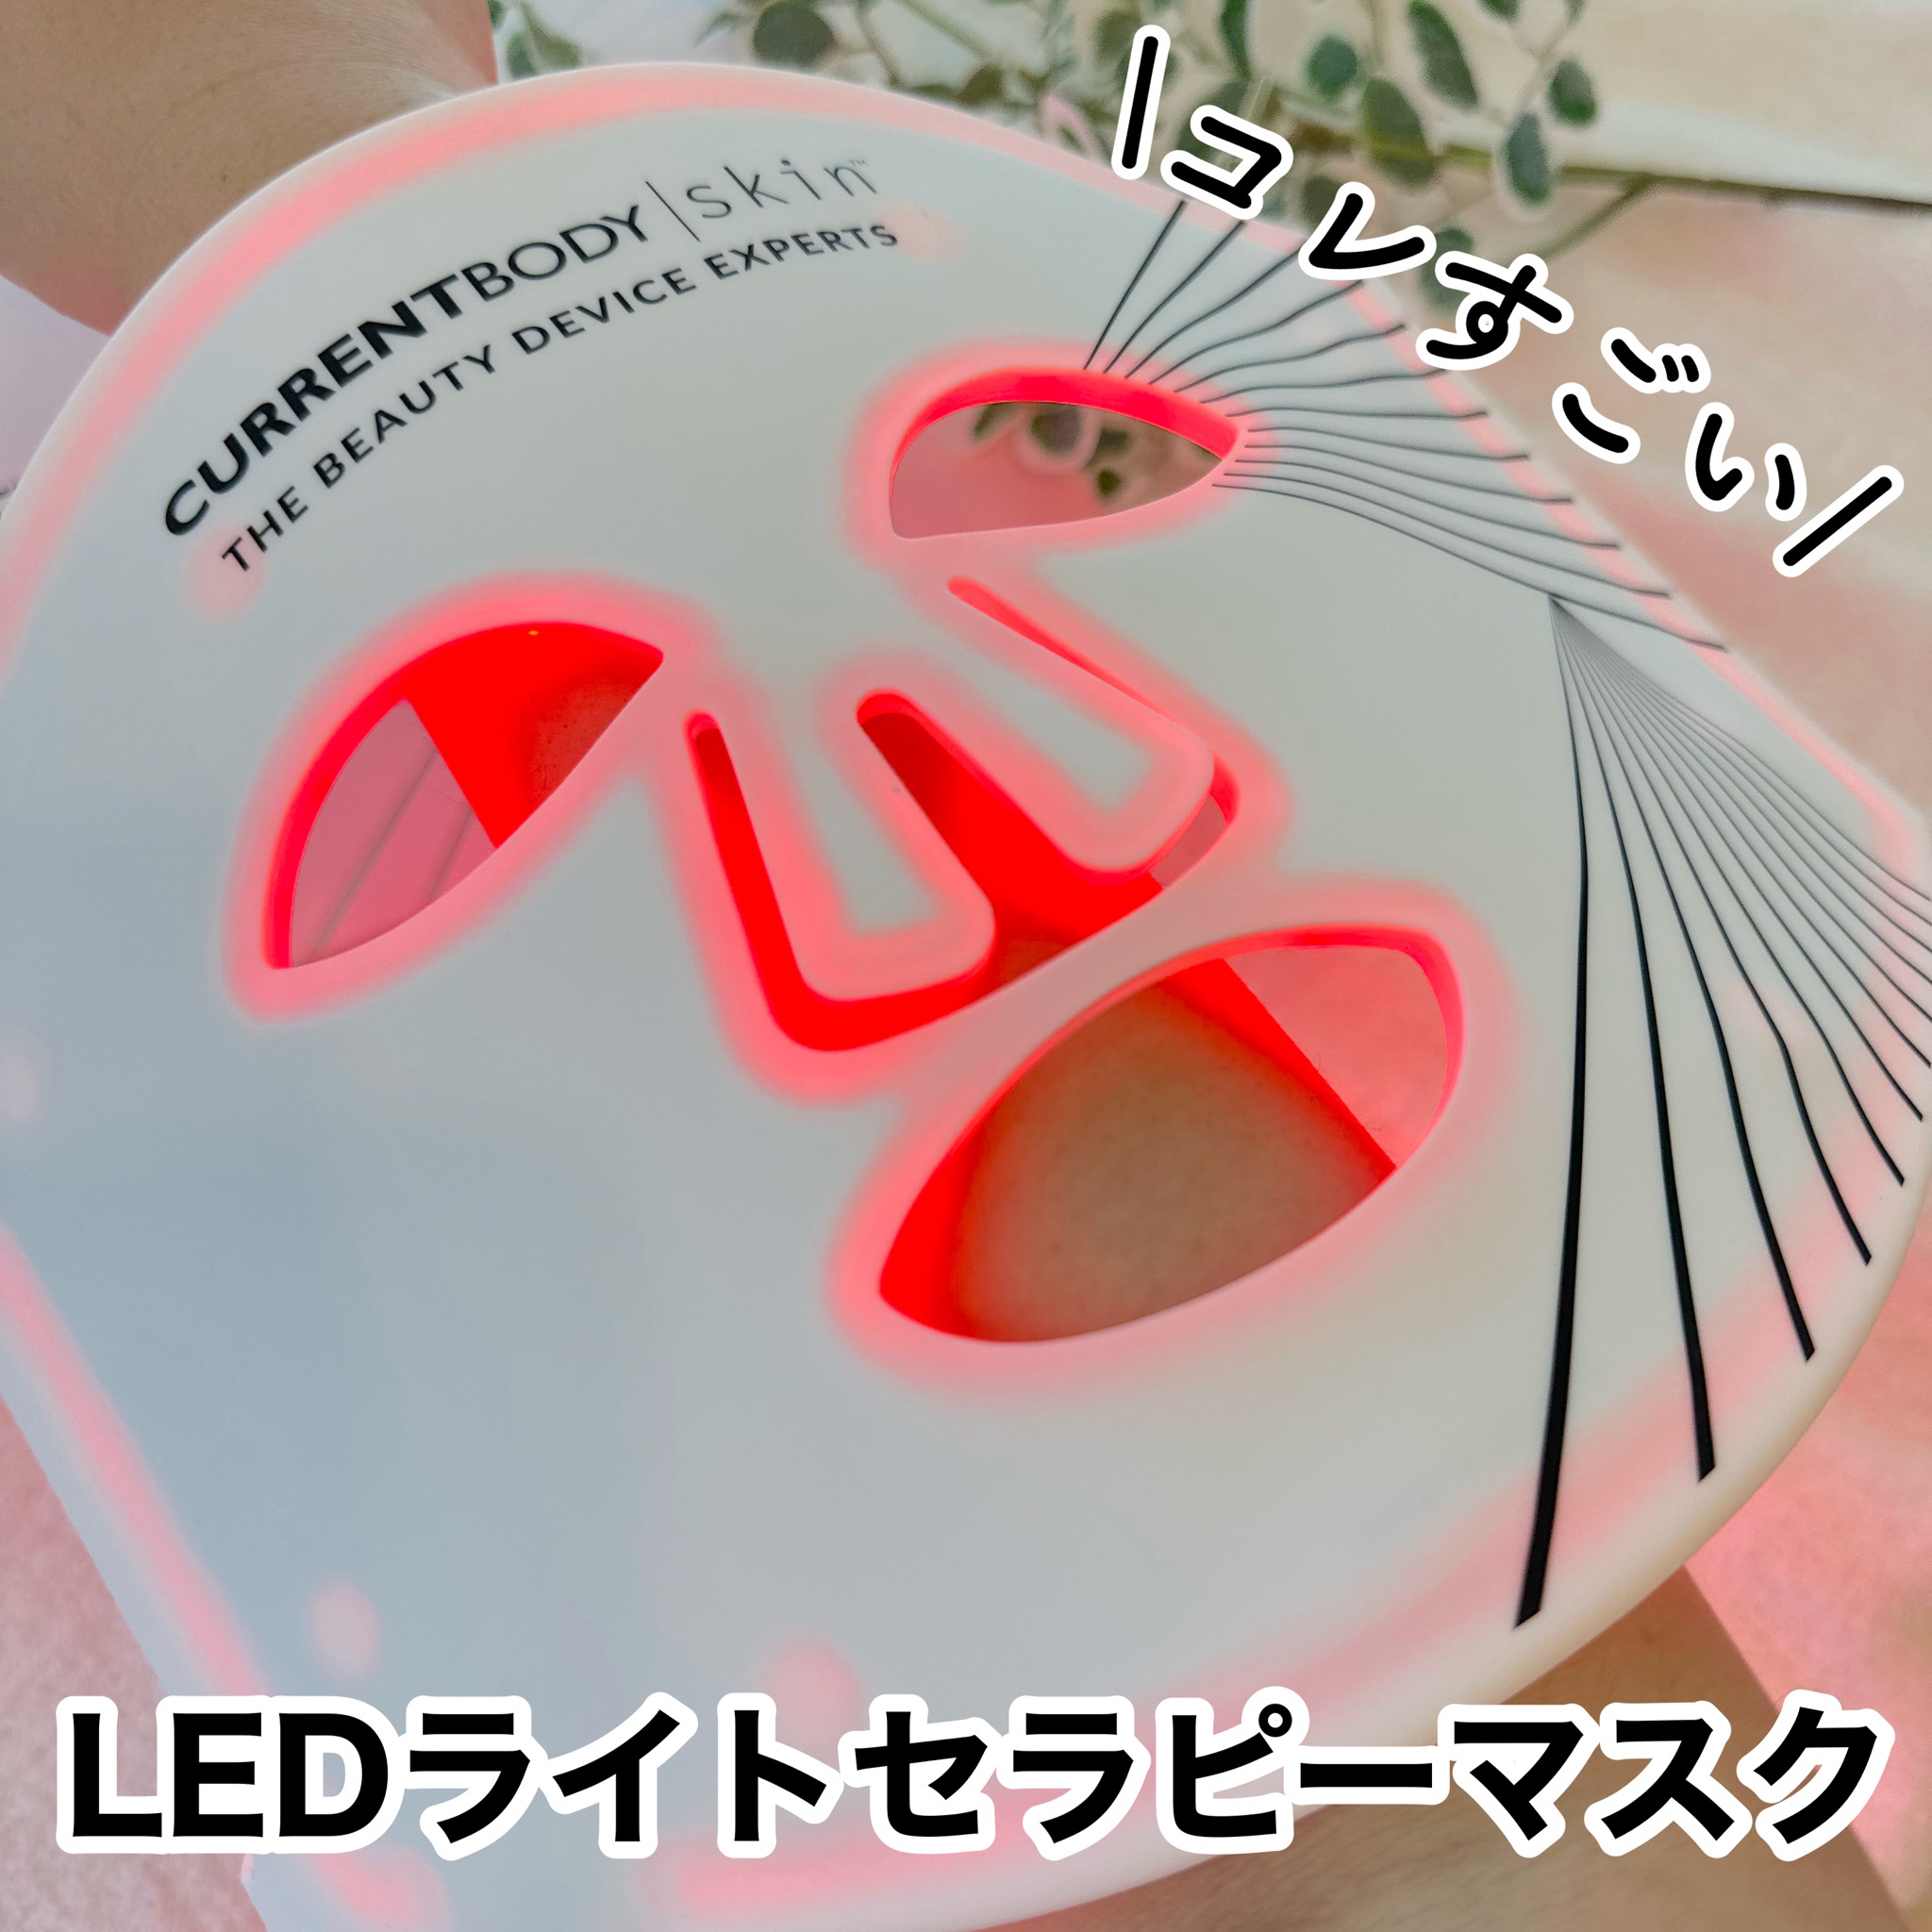 CurrentBody Skin / CurrentBody Skin LED ライトセラピーマスク